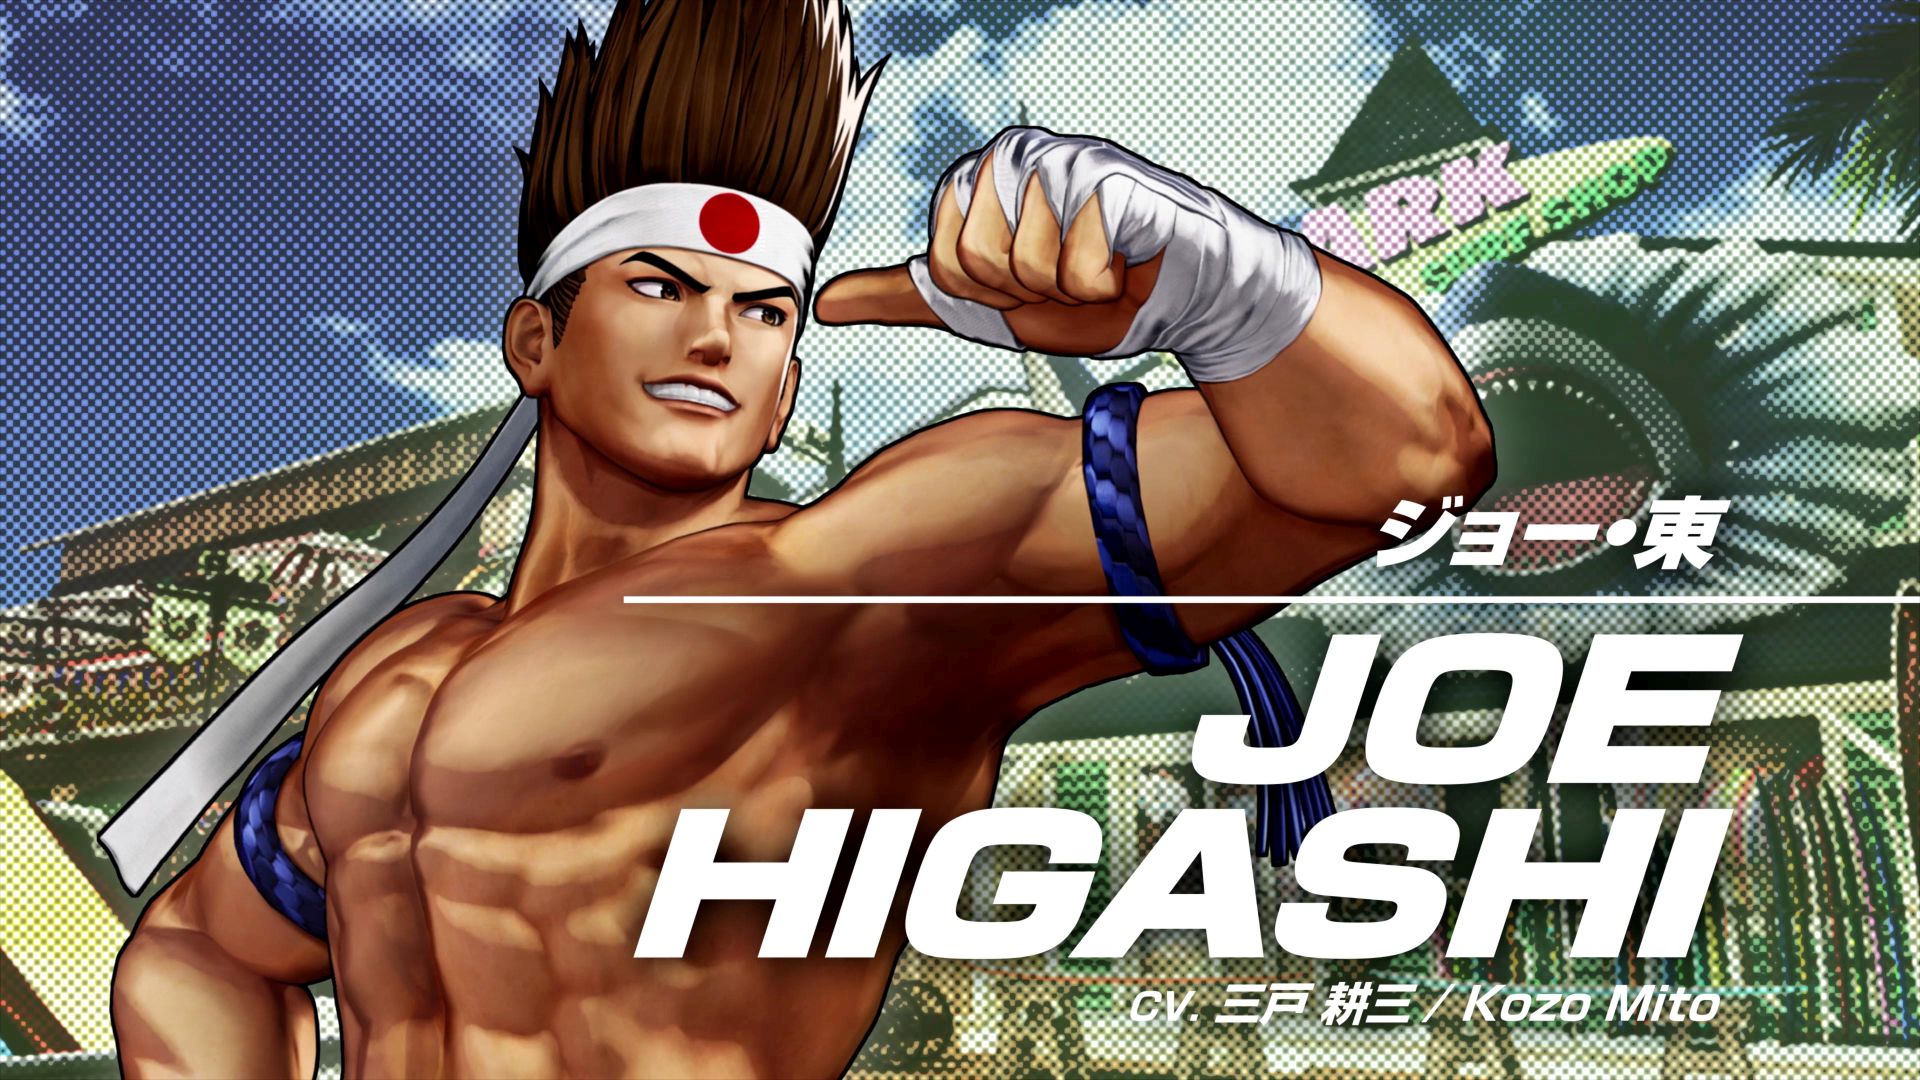 The King Of Fighters 15 Joe Higashi